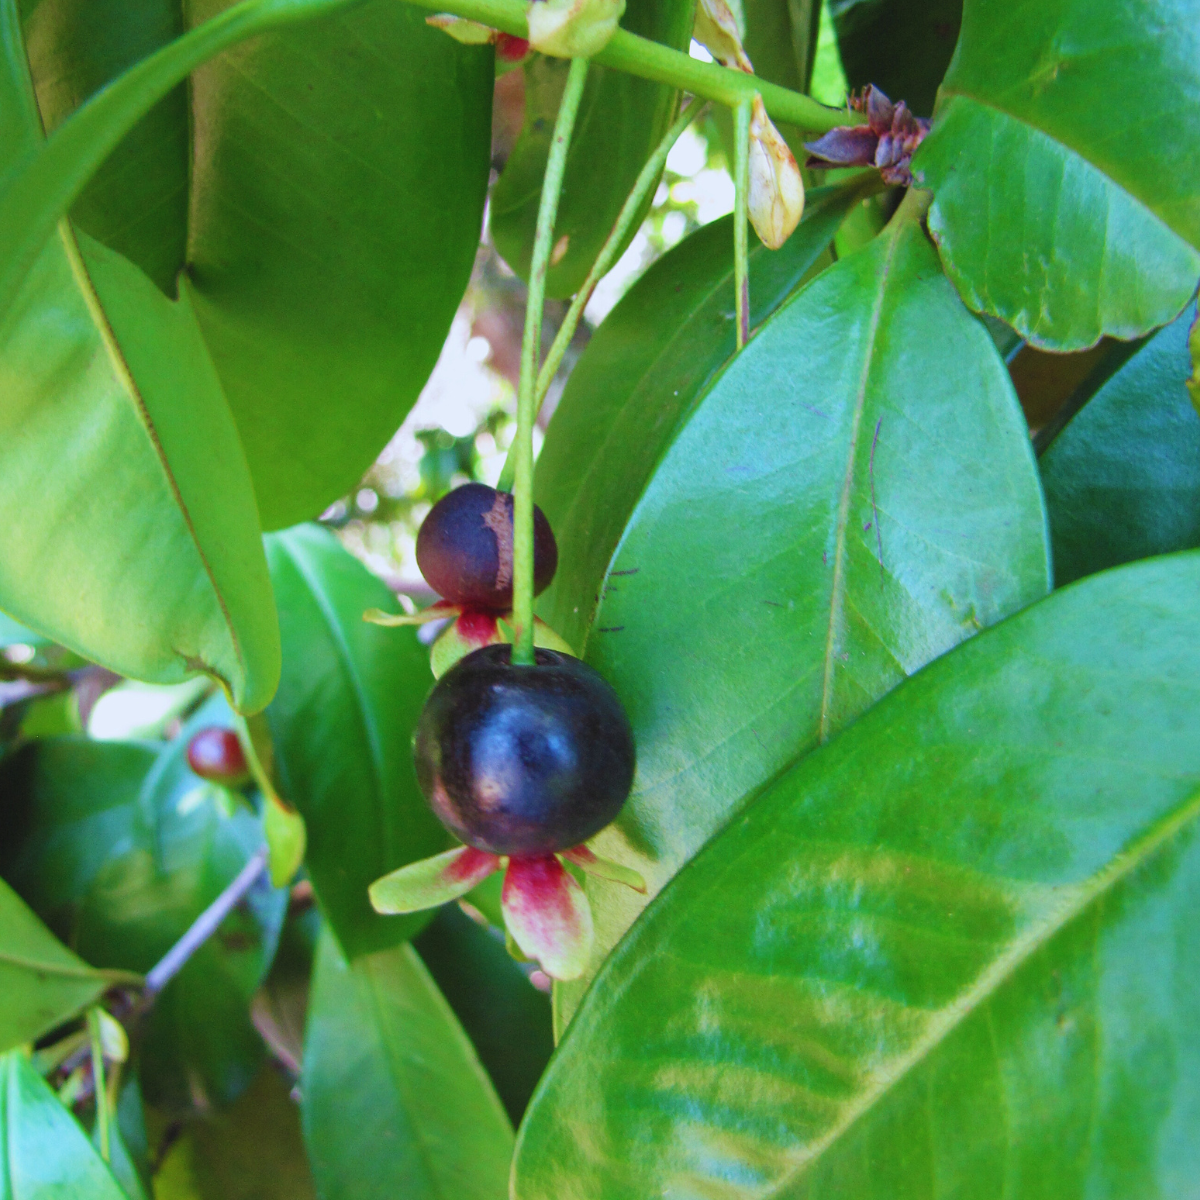 Image of Brazilian cherry